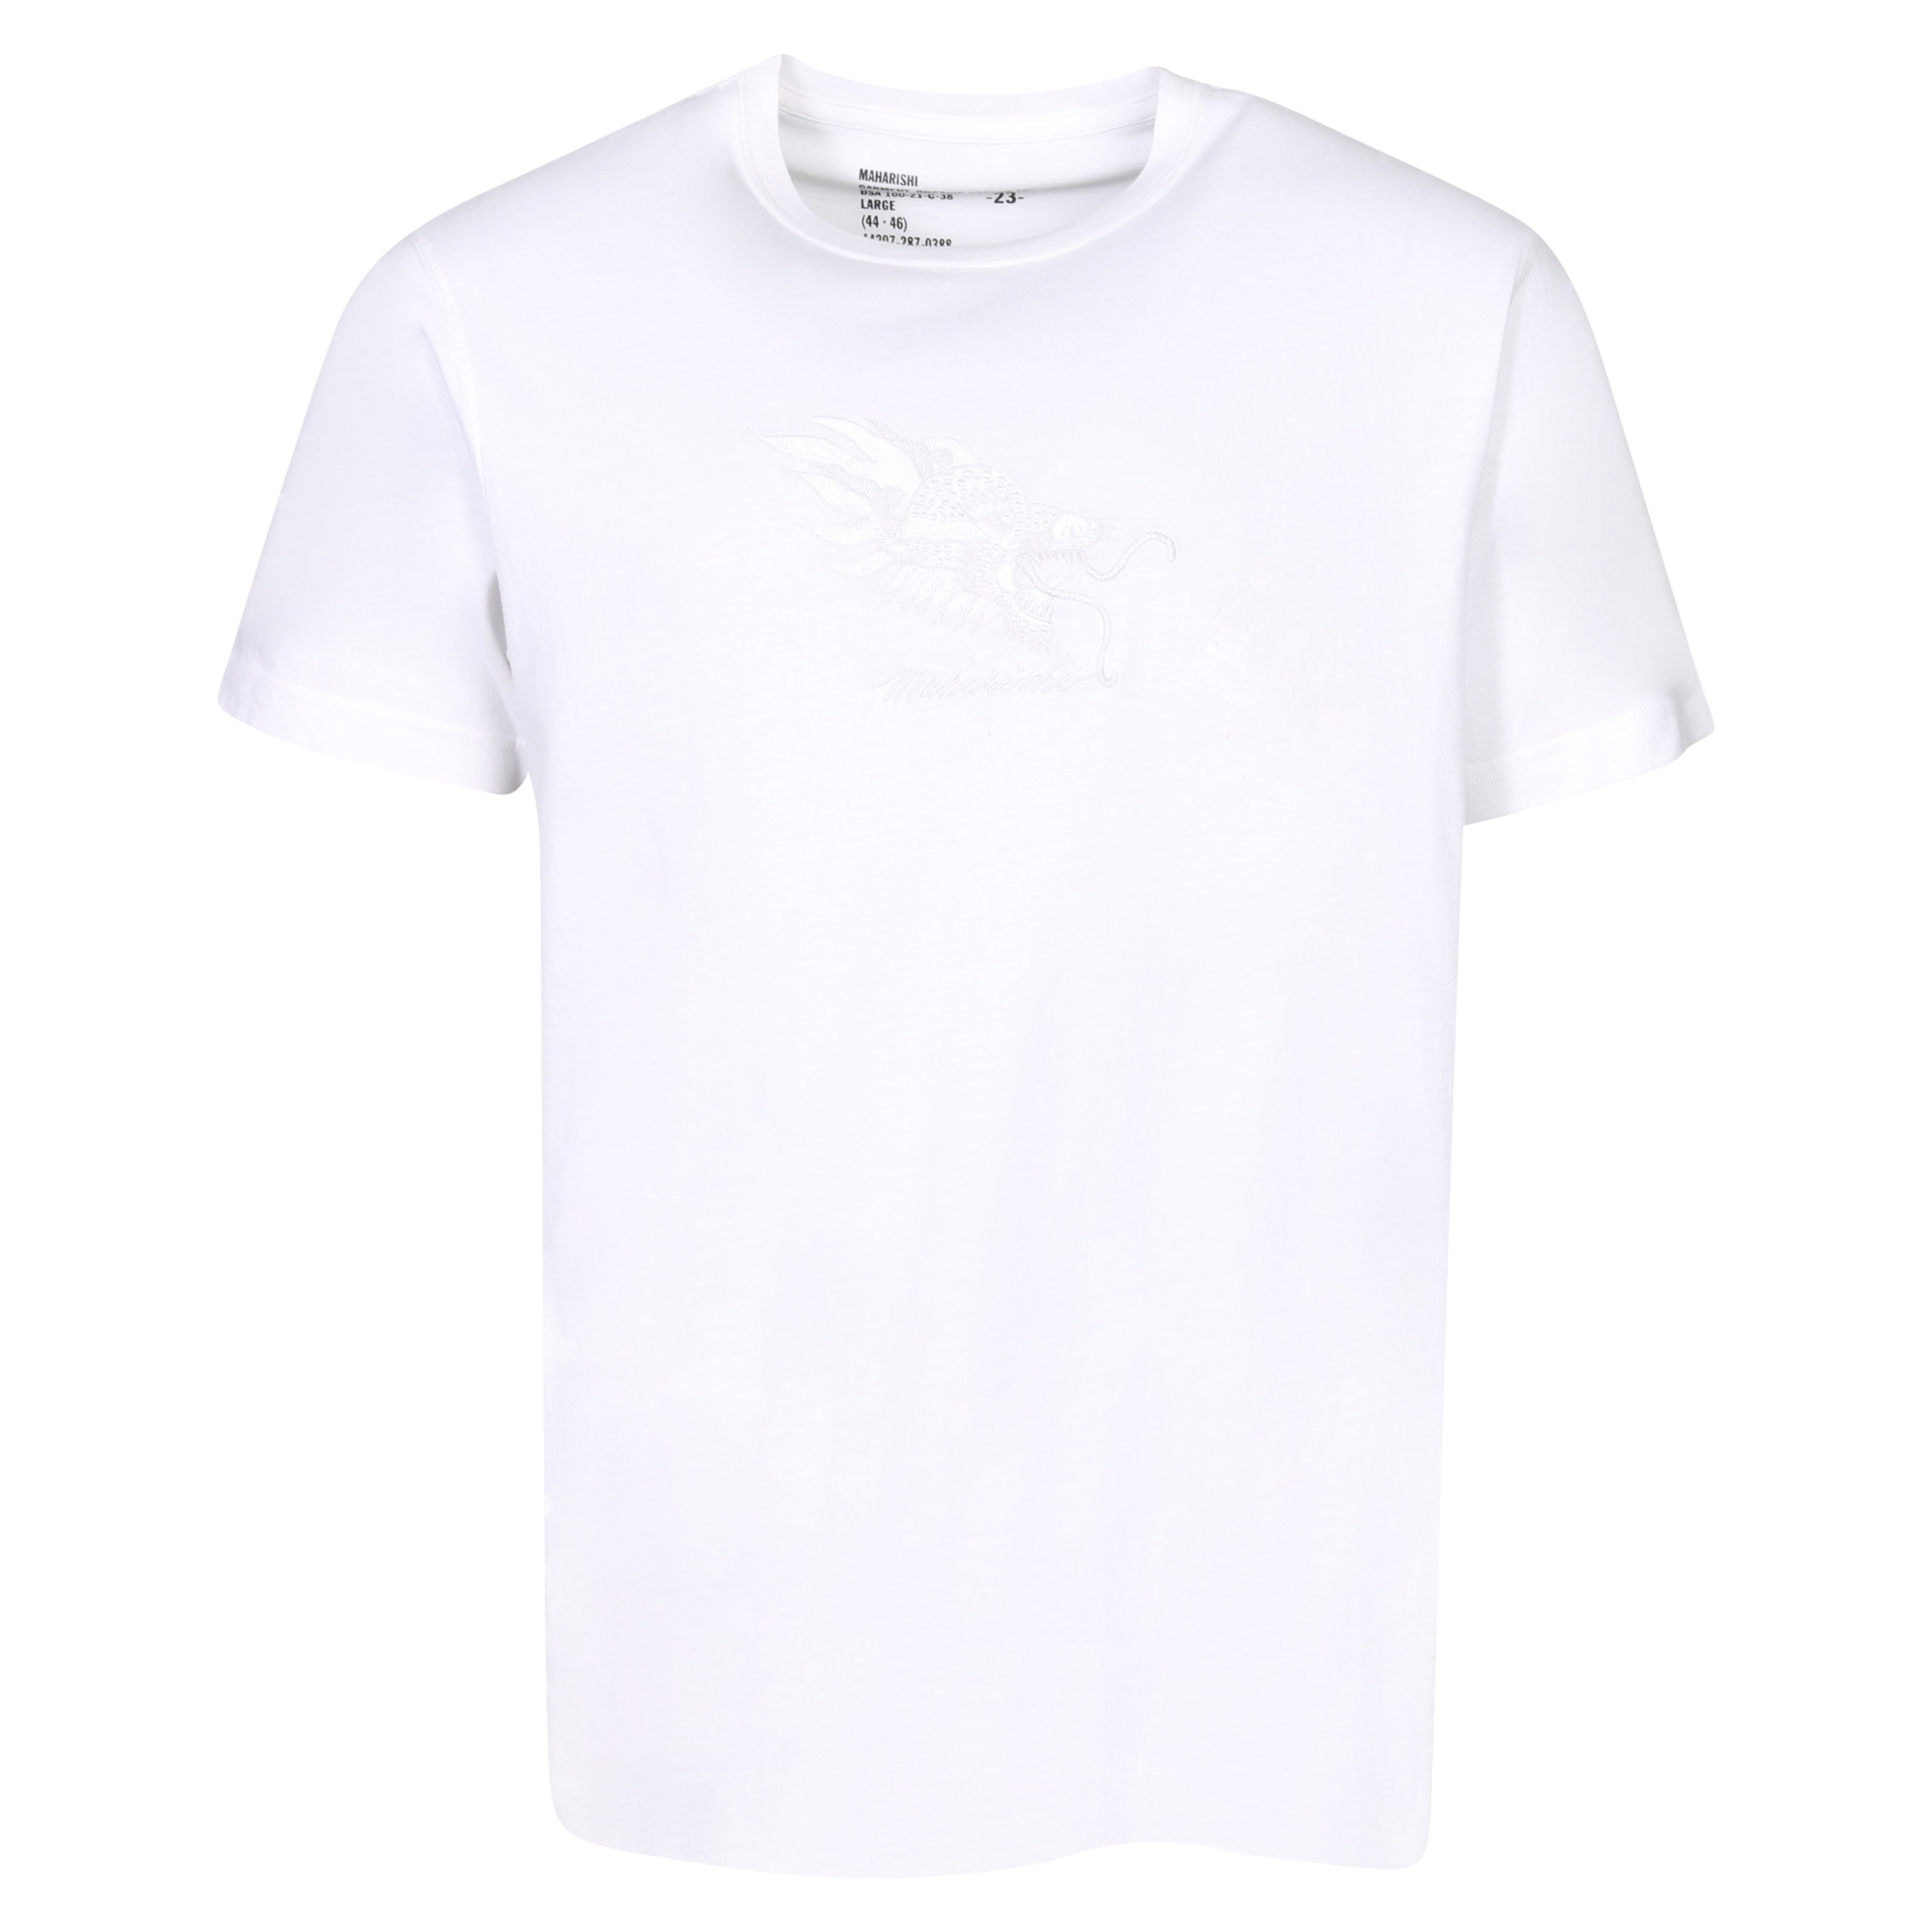 Maharishi Tibetan Dragon T-Shirt in White